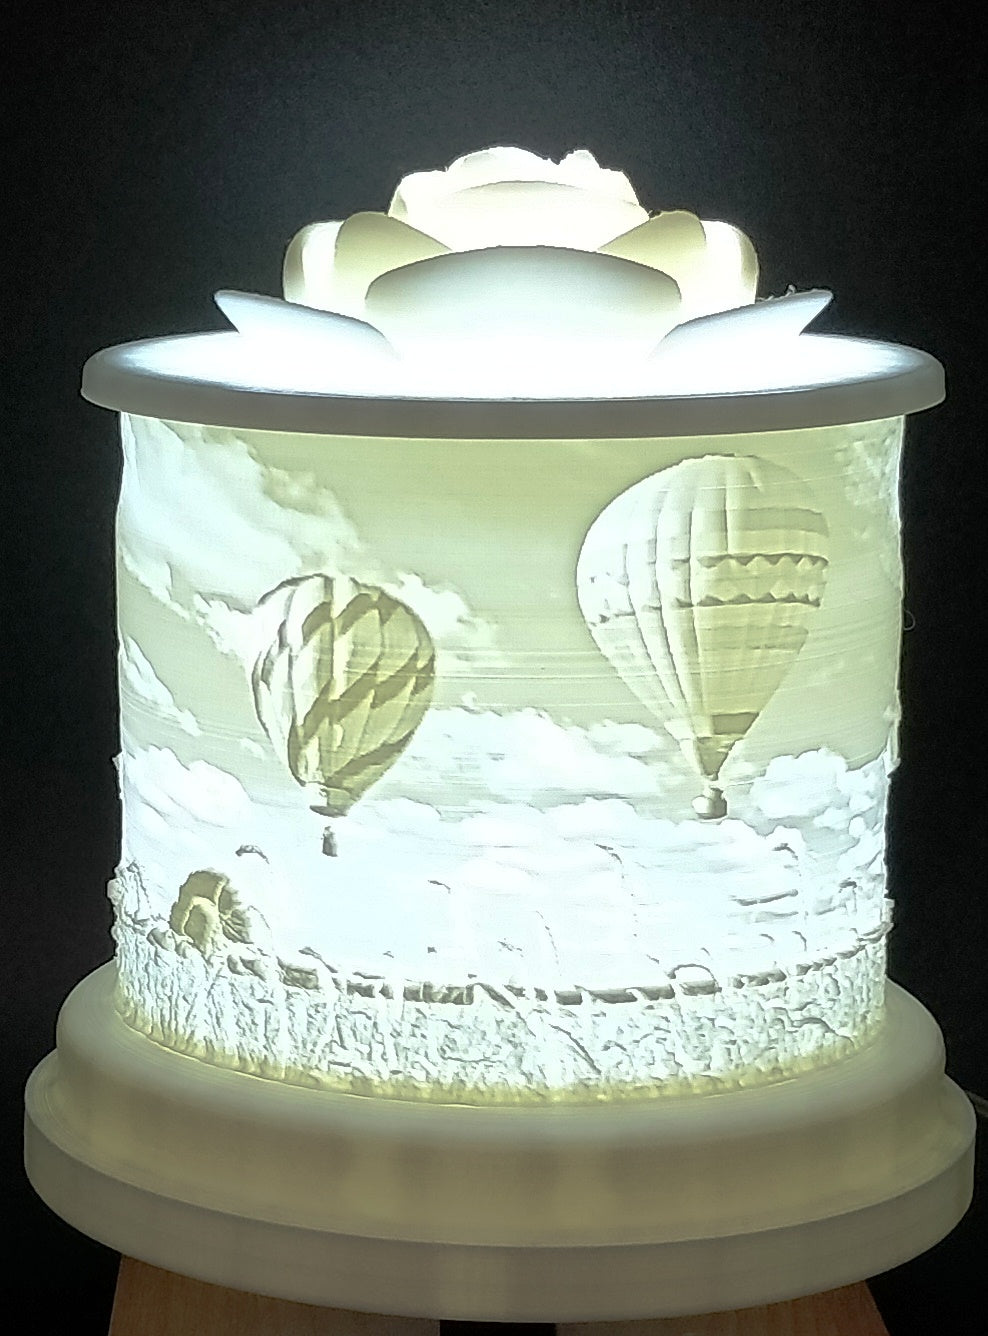 3D Kerzenlicht Panorama Heißluftballon